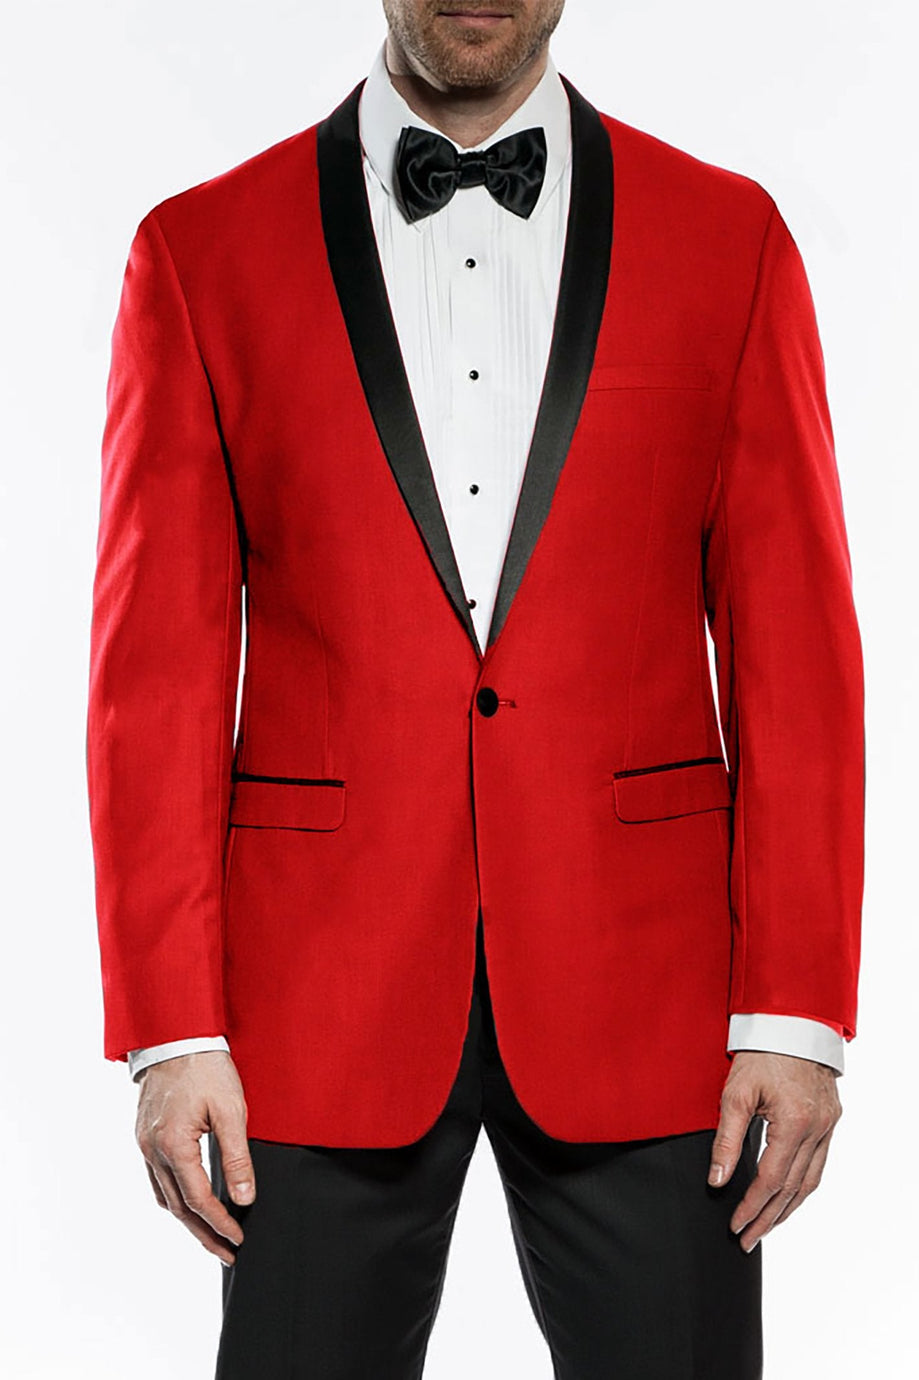 Vinci "Sleek" Red Vinci 1-Button Shawl Tuxedo